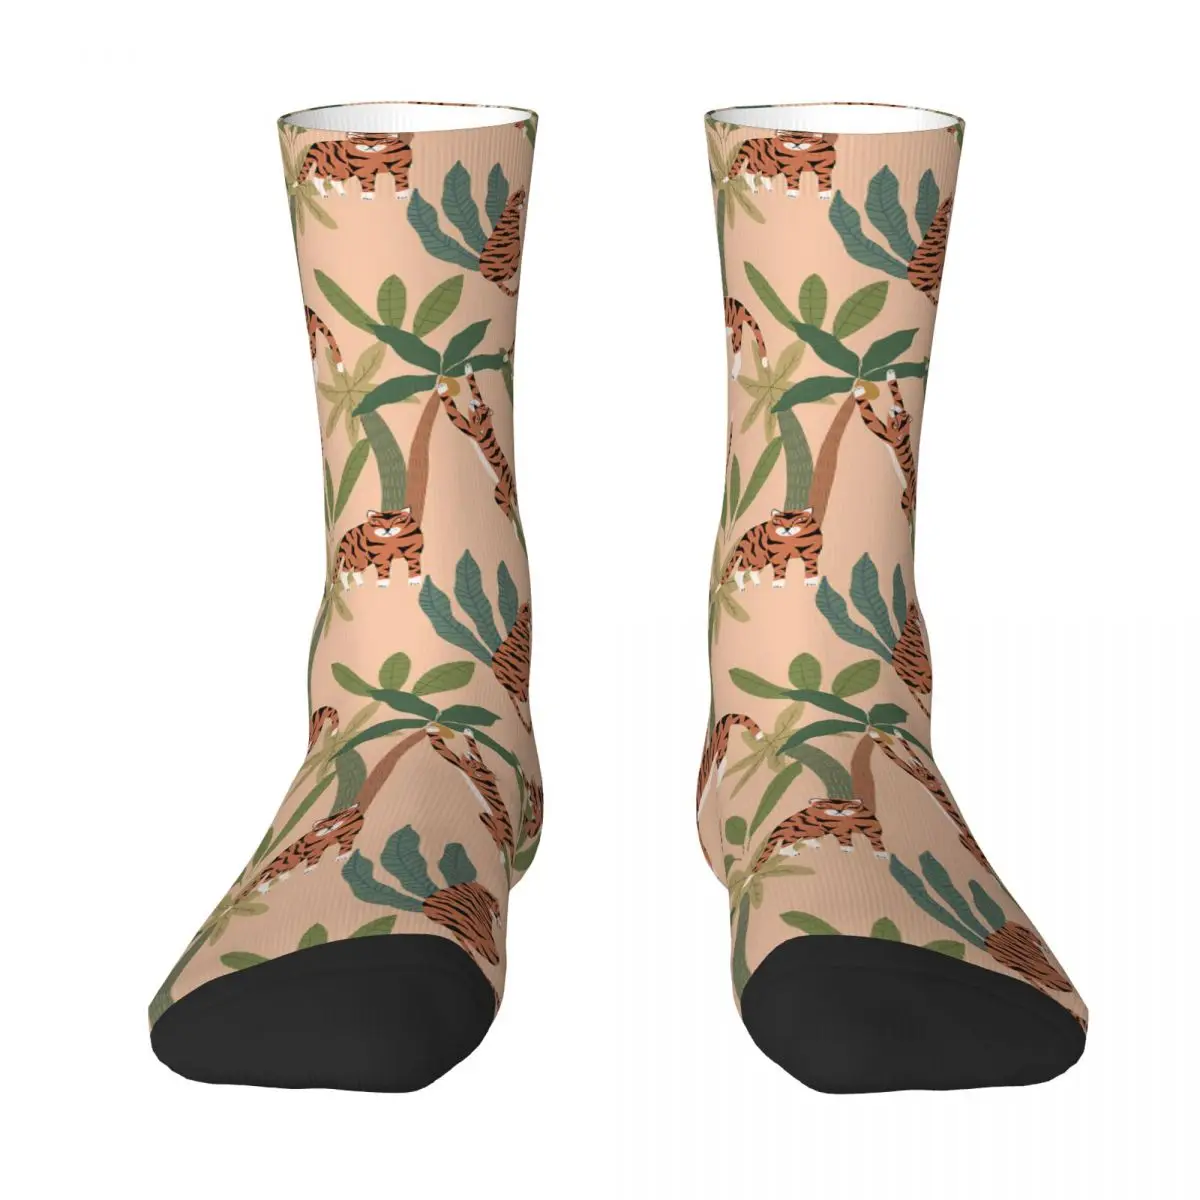 Summer Seamless Pattern With Tigers And Palm Trees Adult Socks,Unisex socks,men Socks women Socks